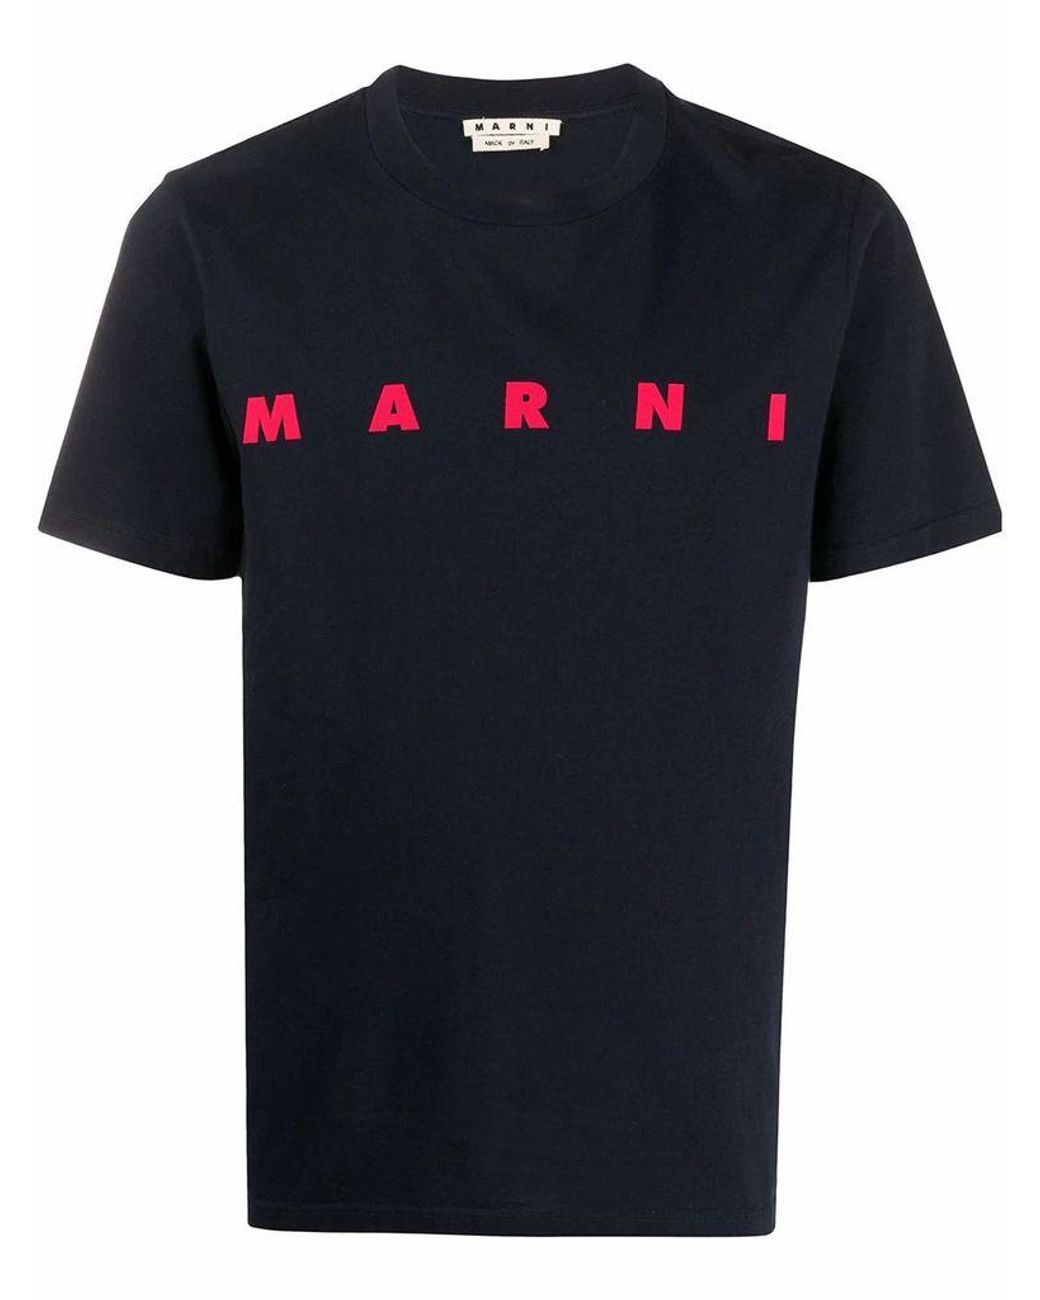 Marni Men's Humu0170p0s2276300b98 Black Cotton T-shirt for Men - Lyst